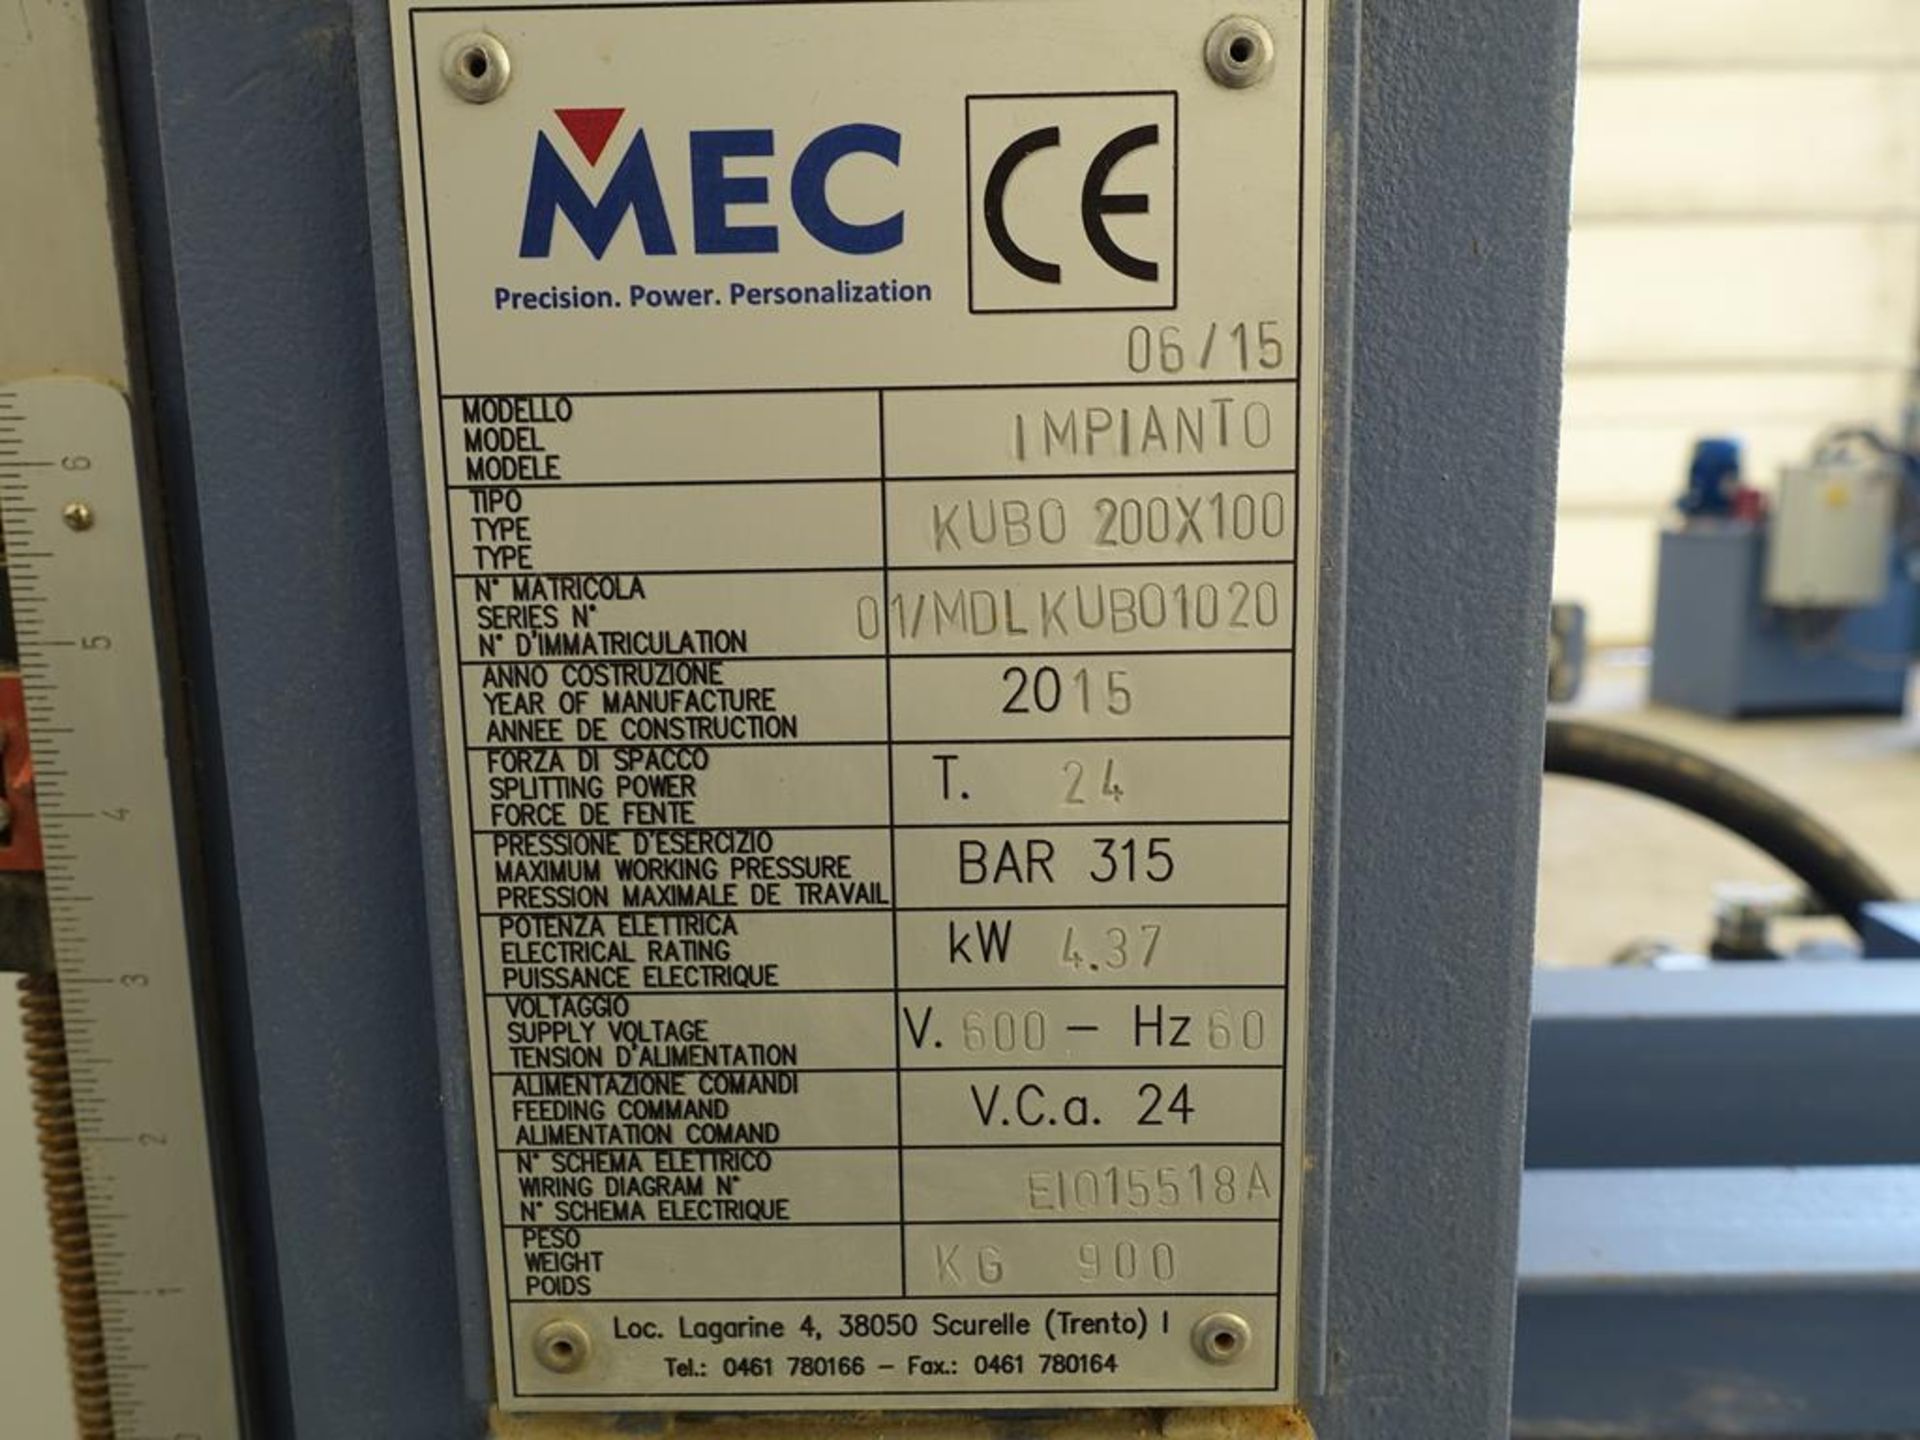 MEC, IMPIANTO - KUBO 200X100, 24 TON, AUTOMATIC STONE SPLITTER WITH CONVEYOR, 2015 - Image 11 of 19